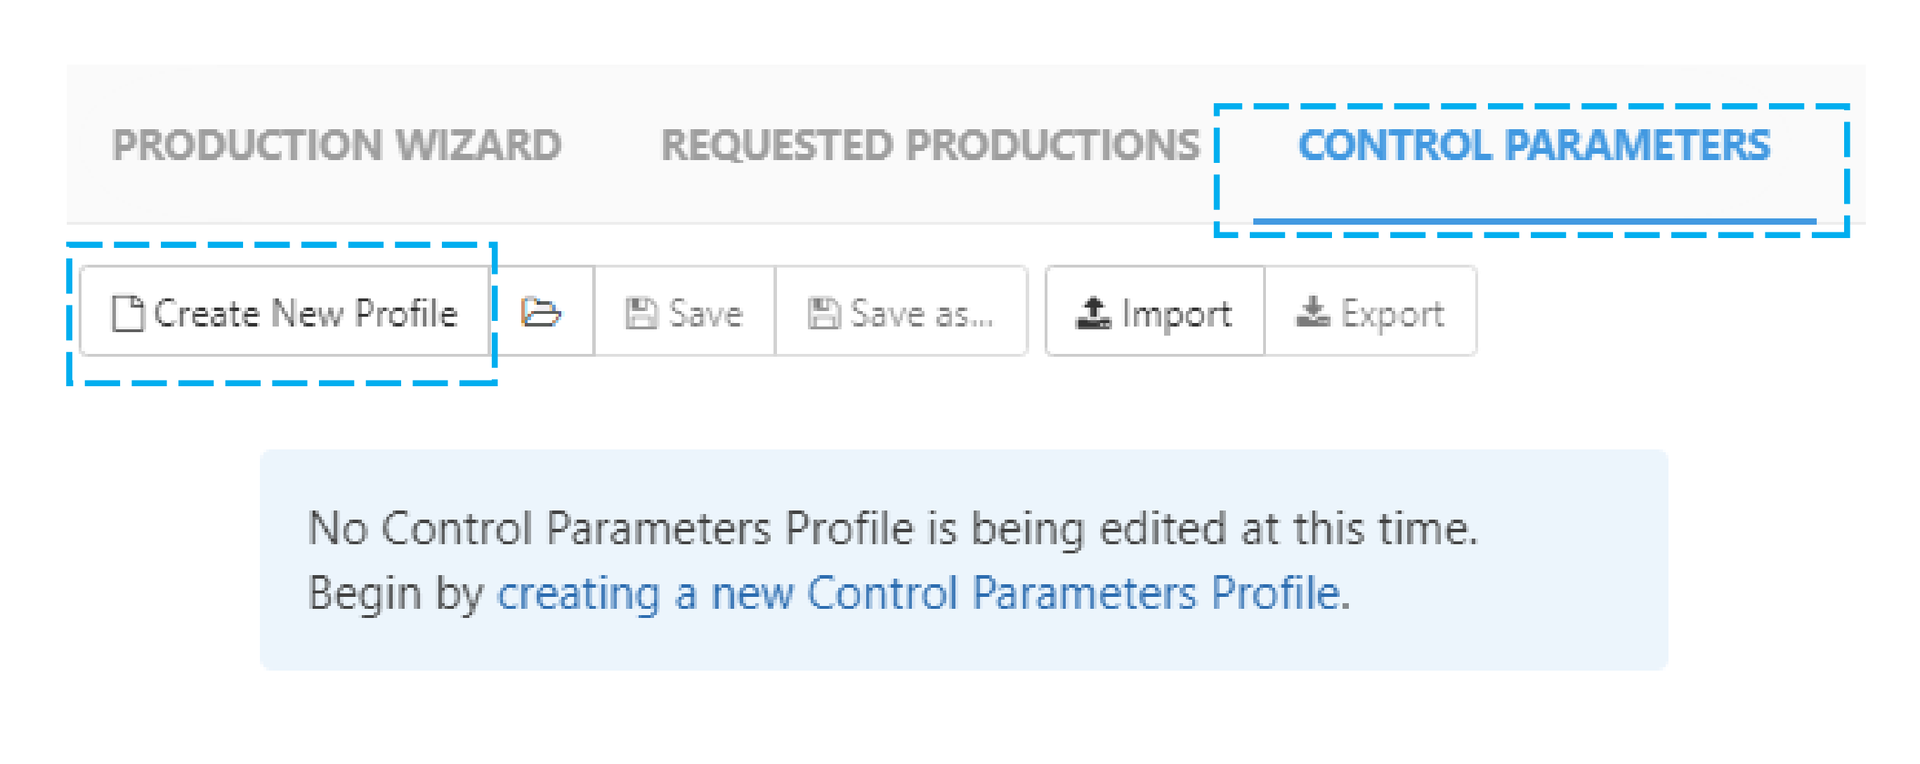 Control Parameter profiles